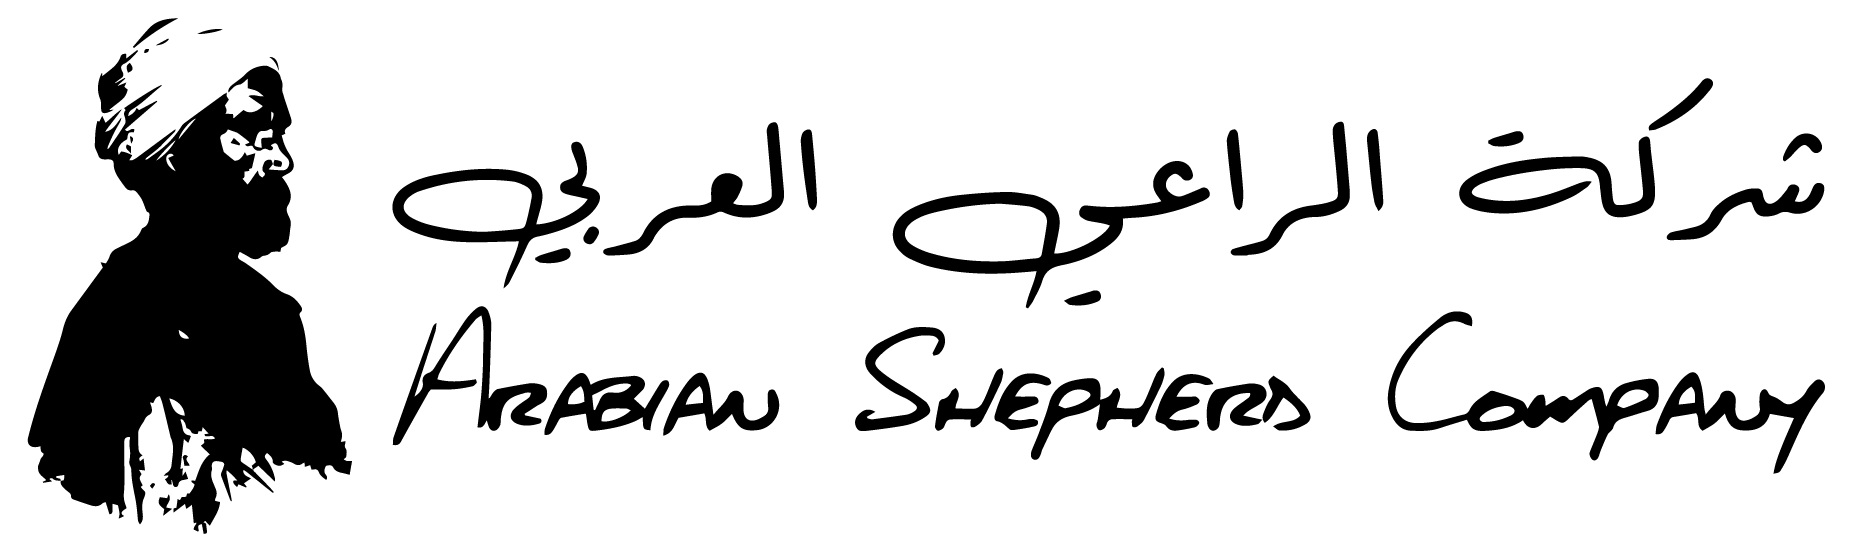 main-logo-3.png